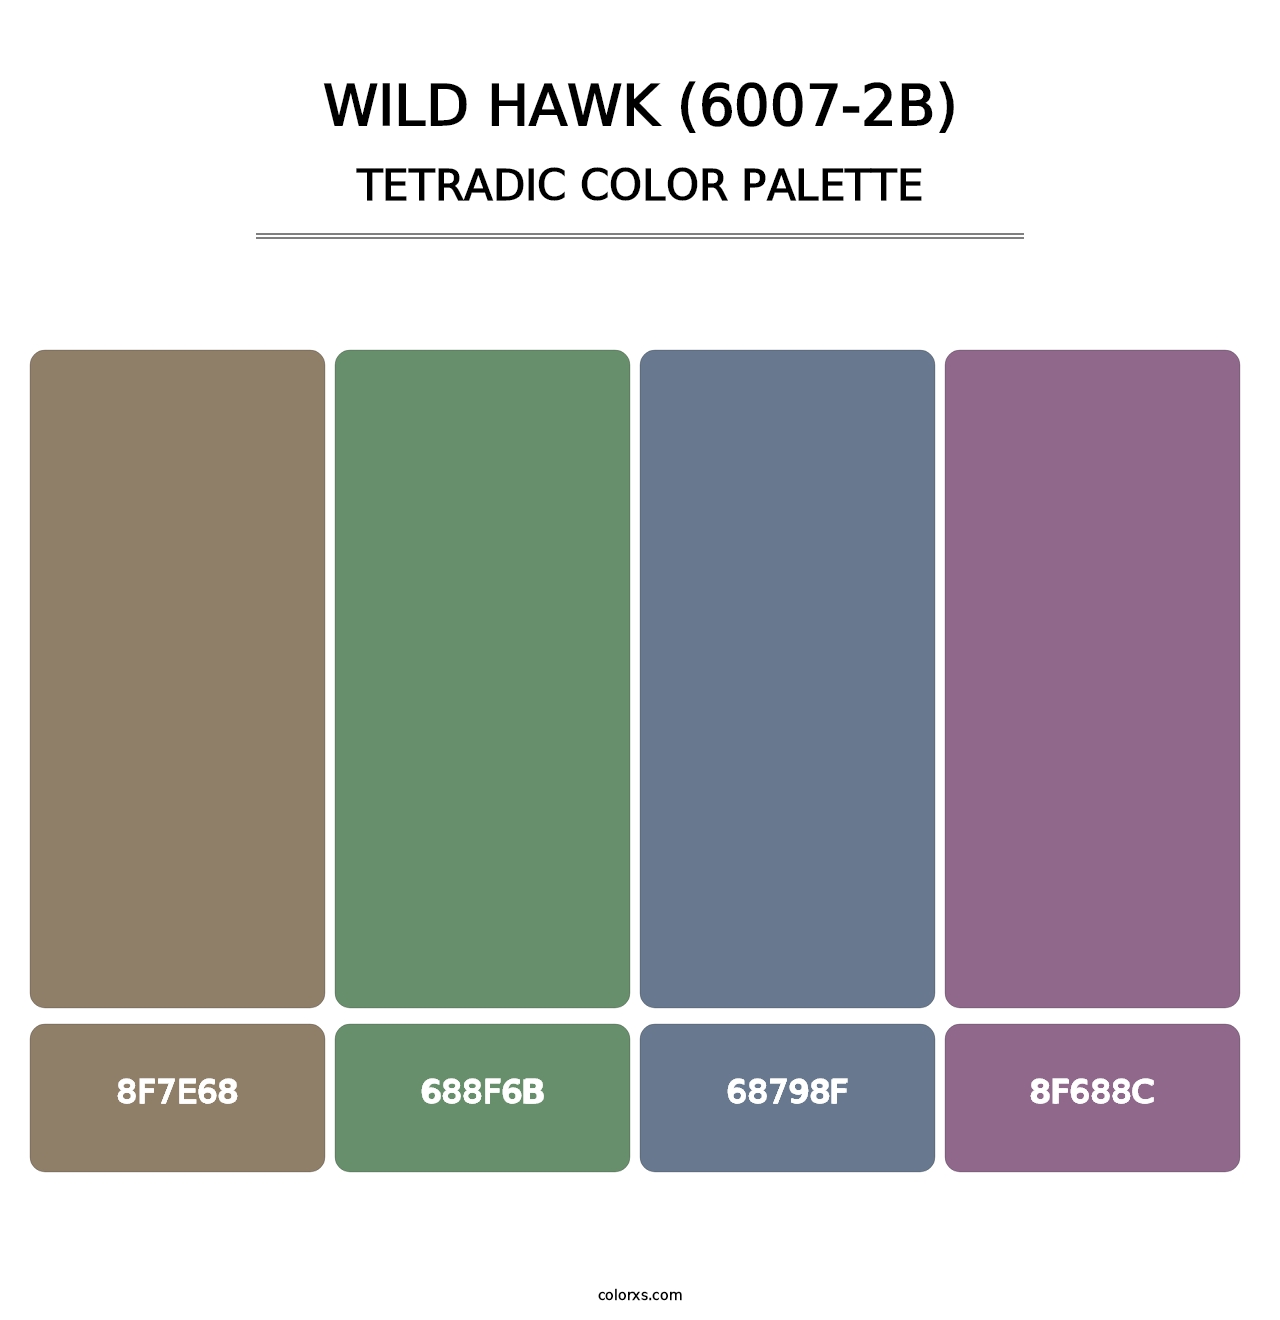 Wild Hawk (6007-2B) - Tetradic Color Palette